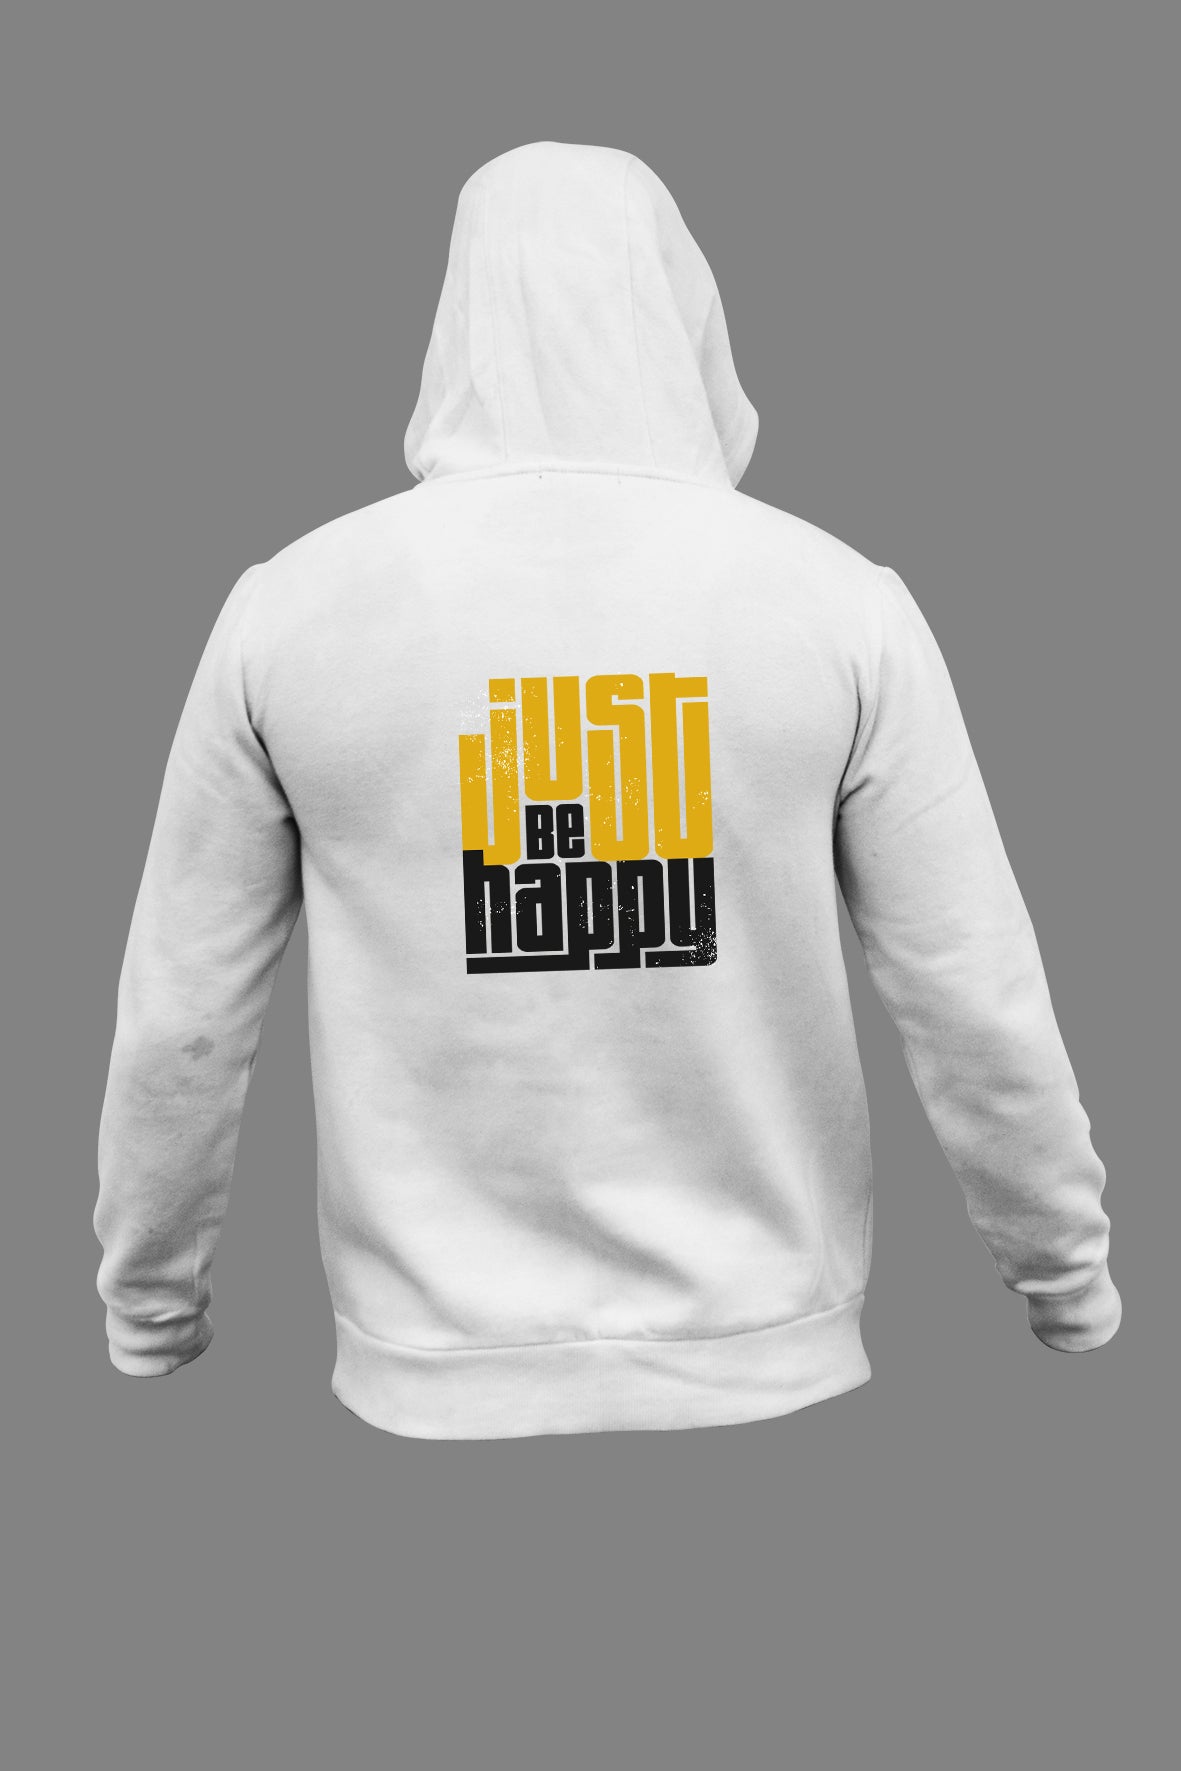 "JUST BE HAPPY" Hooded Sweatshirt